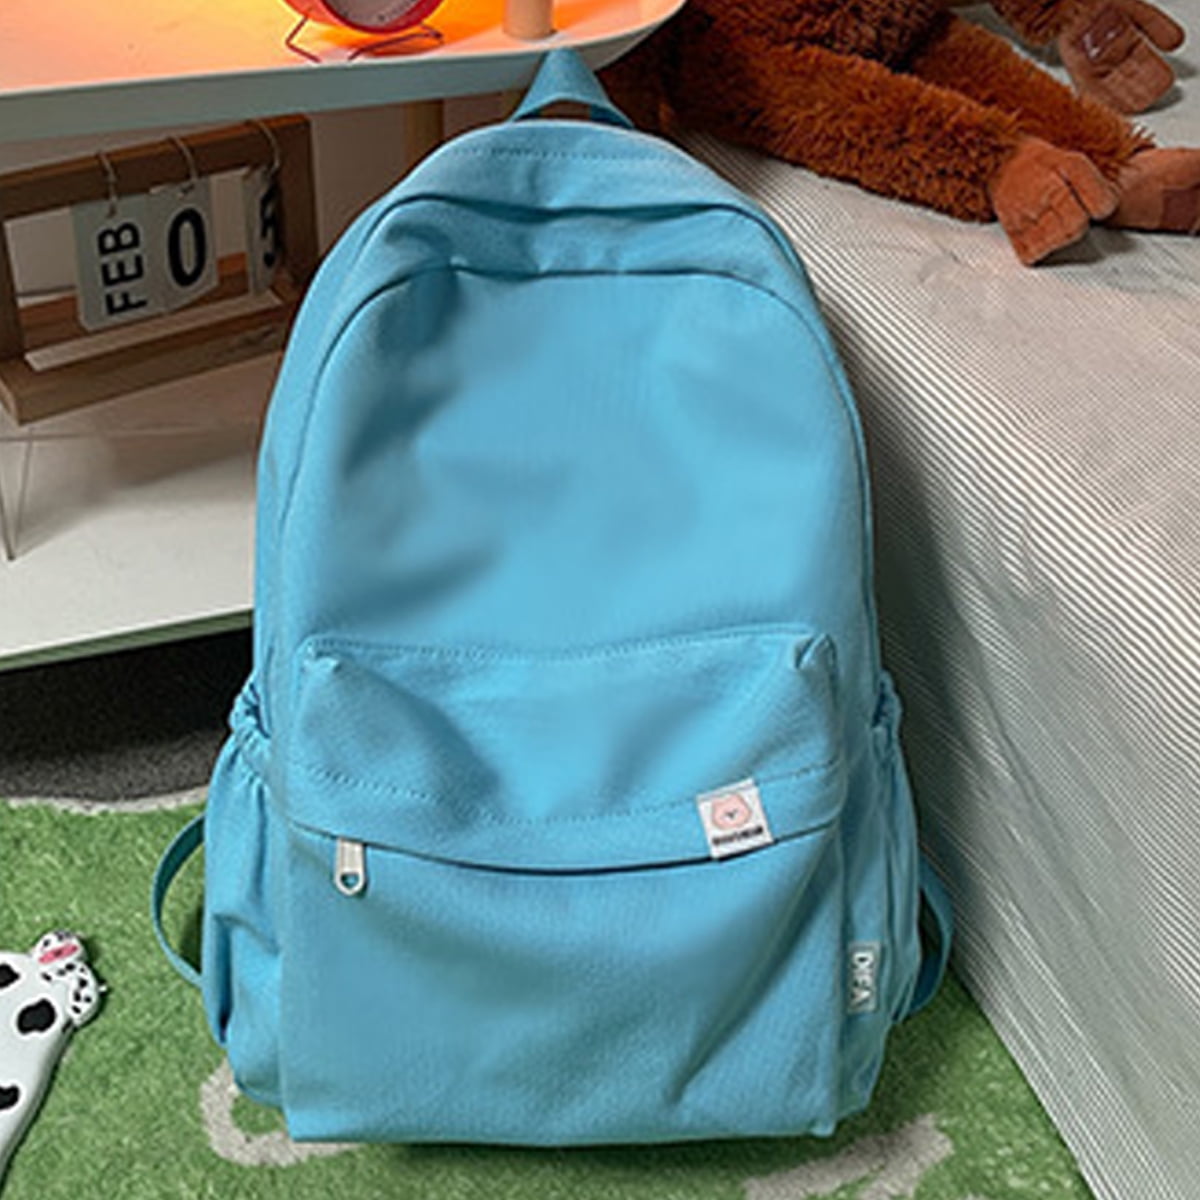 KPOP BTS Bangtan Boy Galaxy Drawstring Bag Travel Bag Handbag Tote Bag  Purse BTS Merchandise (Blue)